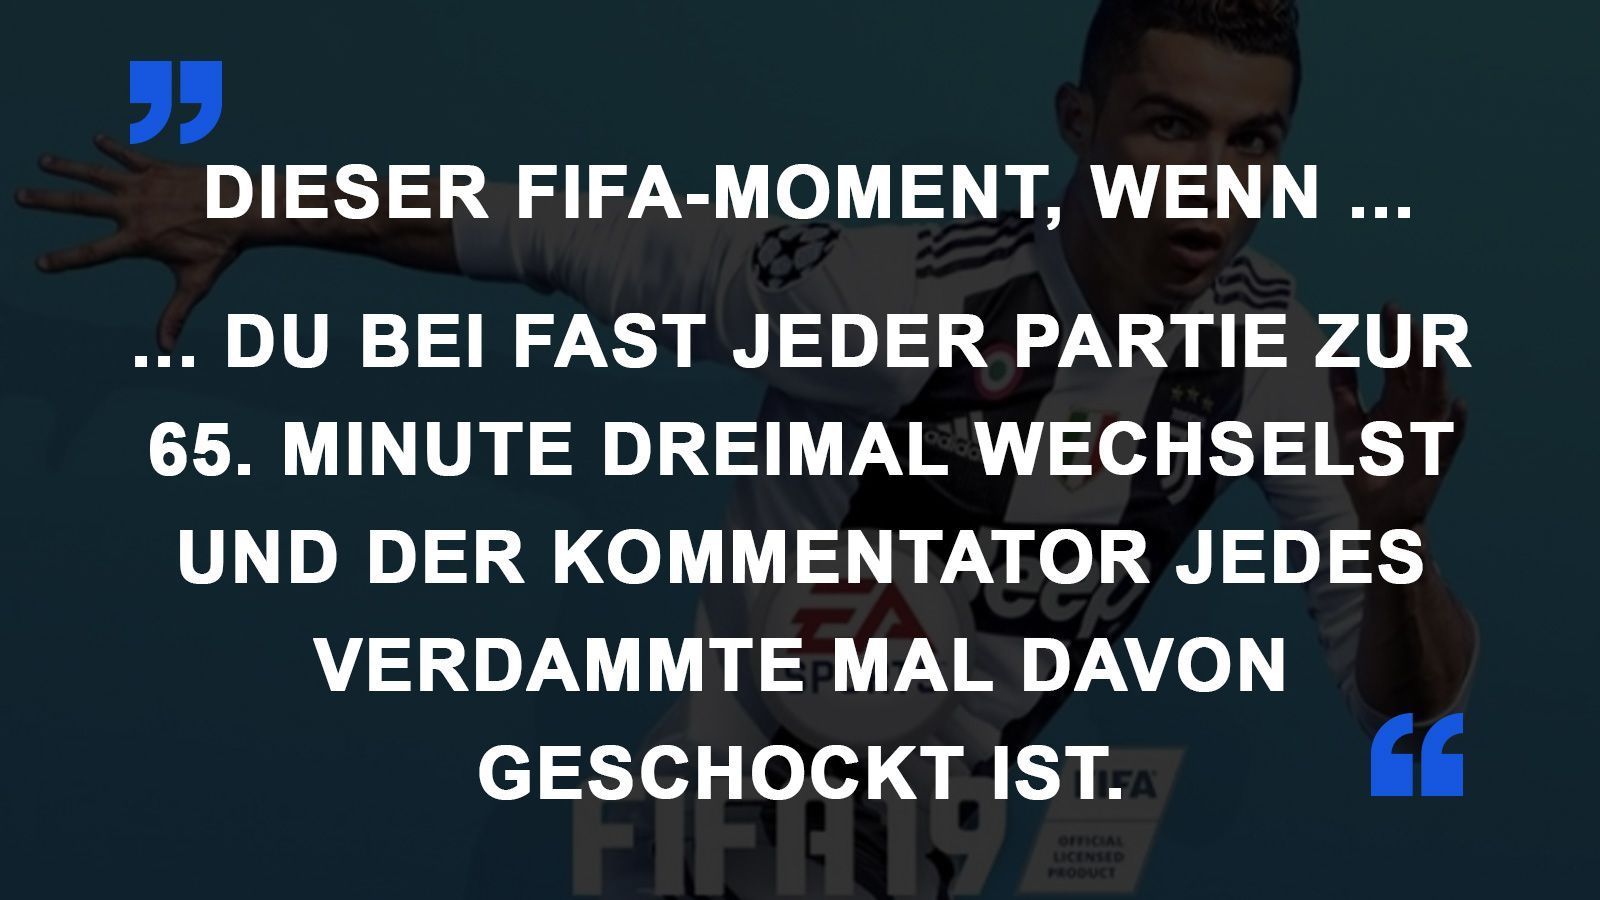 
                <strong>FIFA Momente schockierter Kommentator</strong><br>
                
              